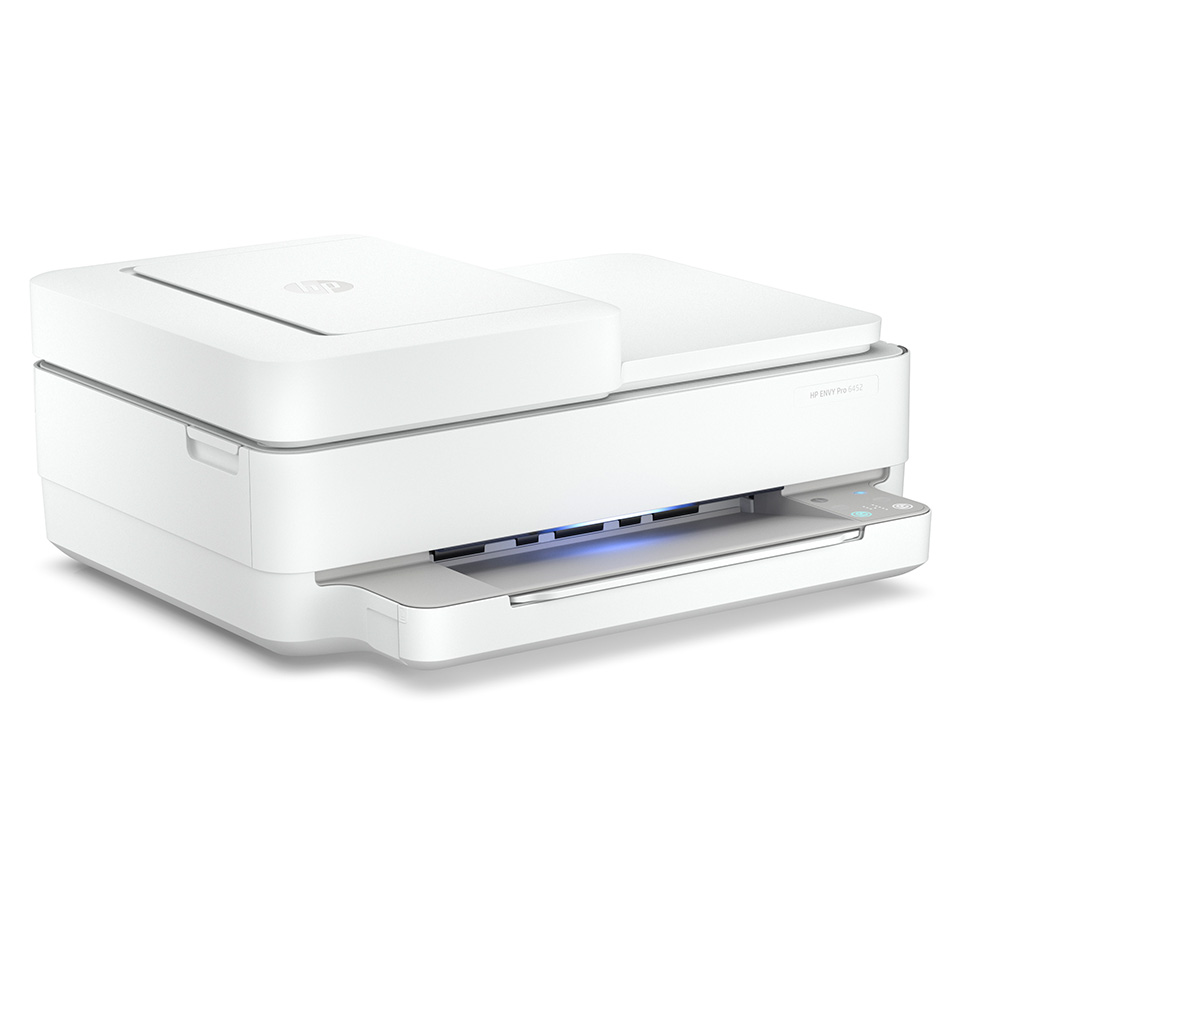 HP svela le nuove stampanti ENVY 6000 e Deskjet 2700